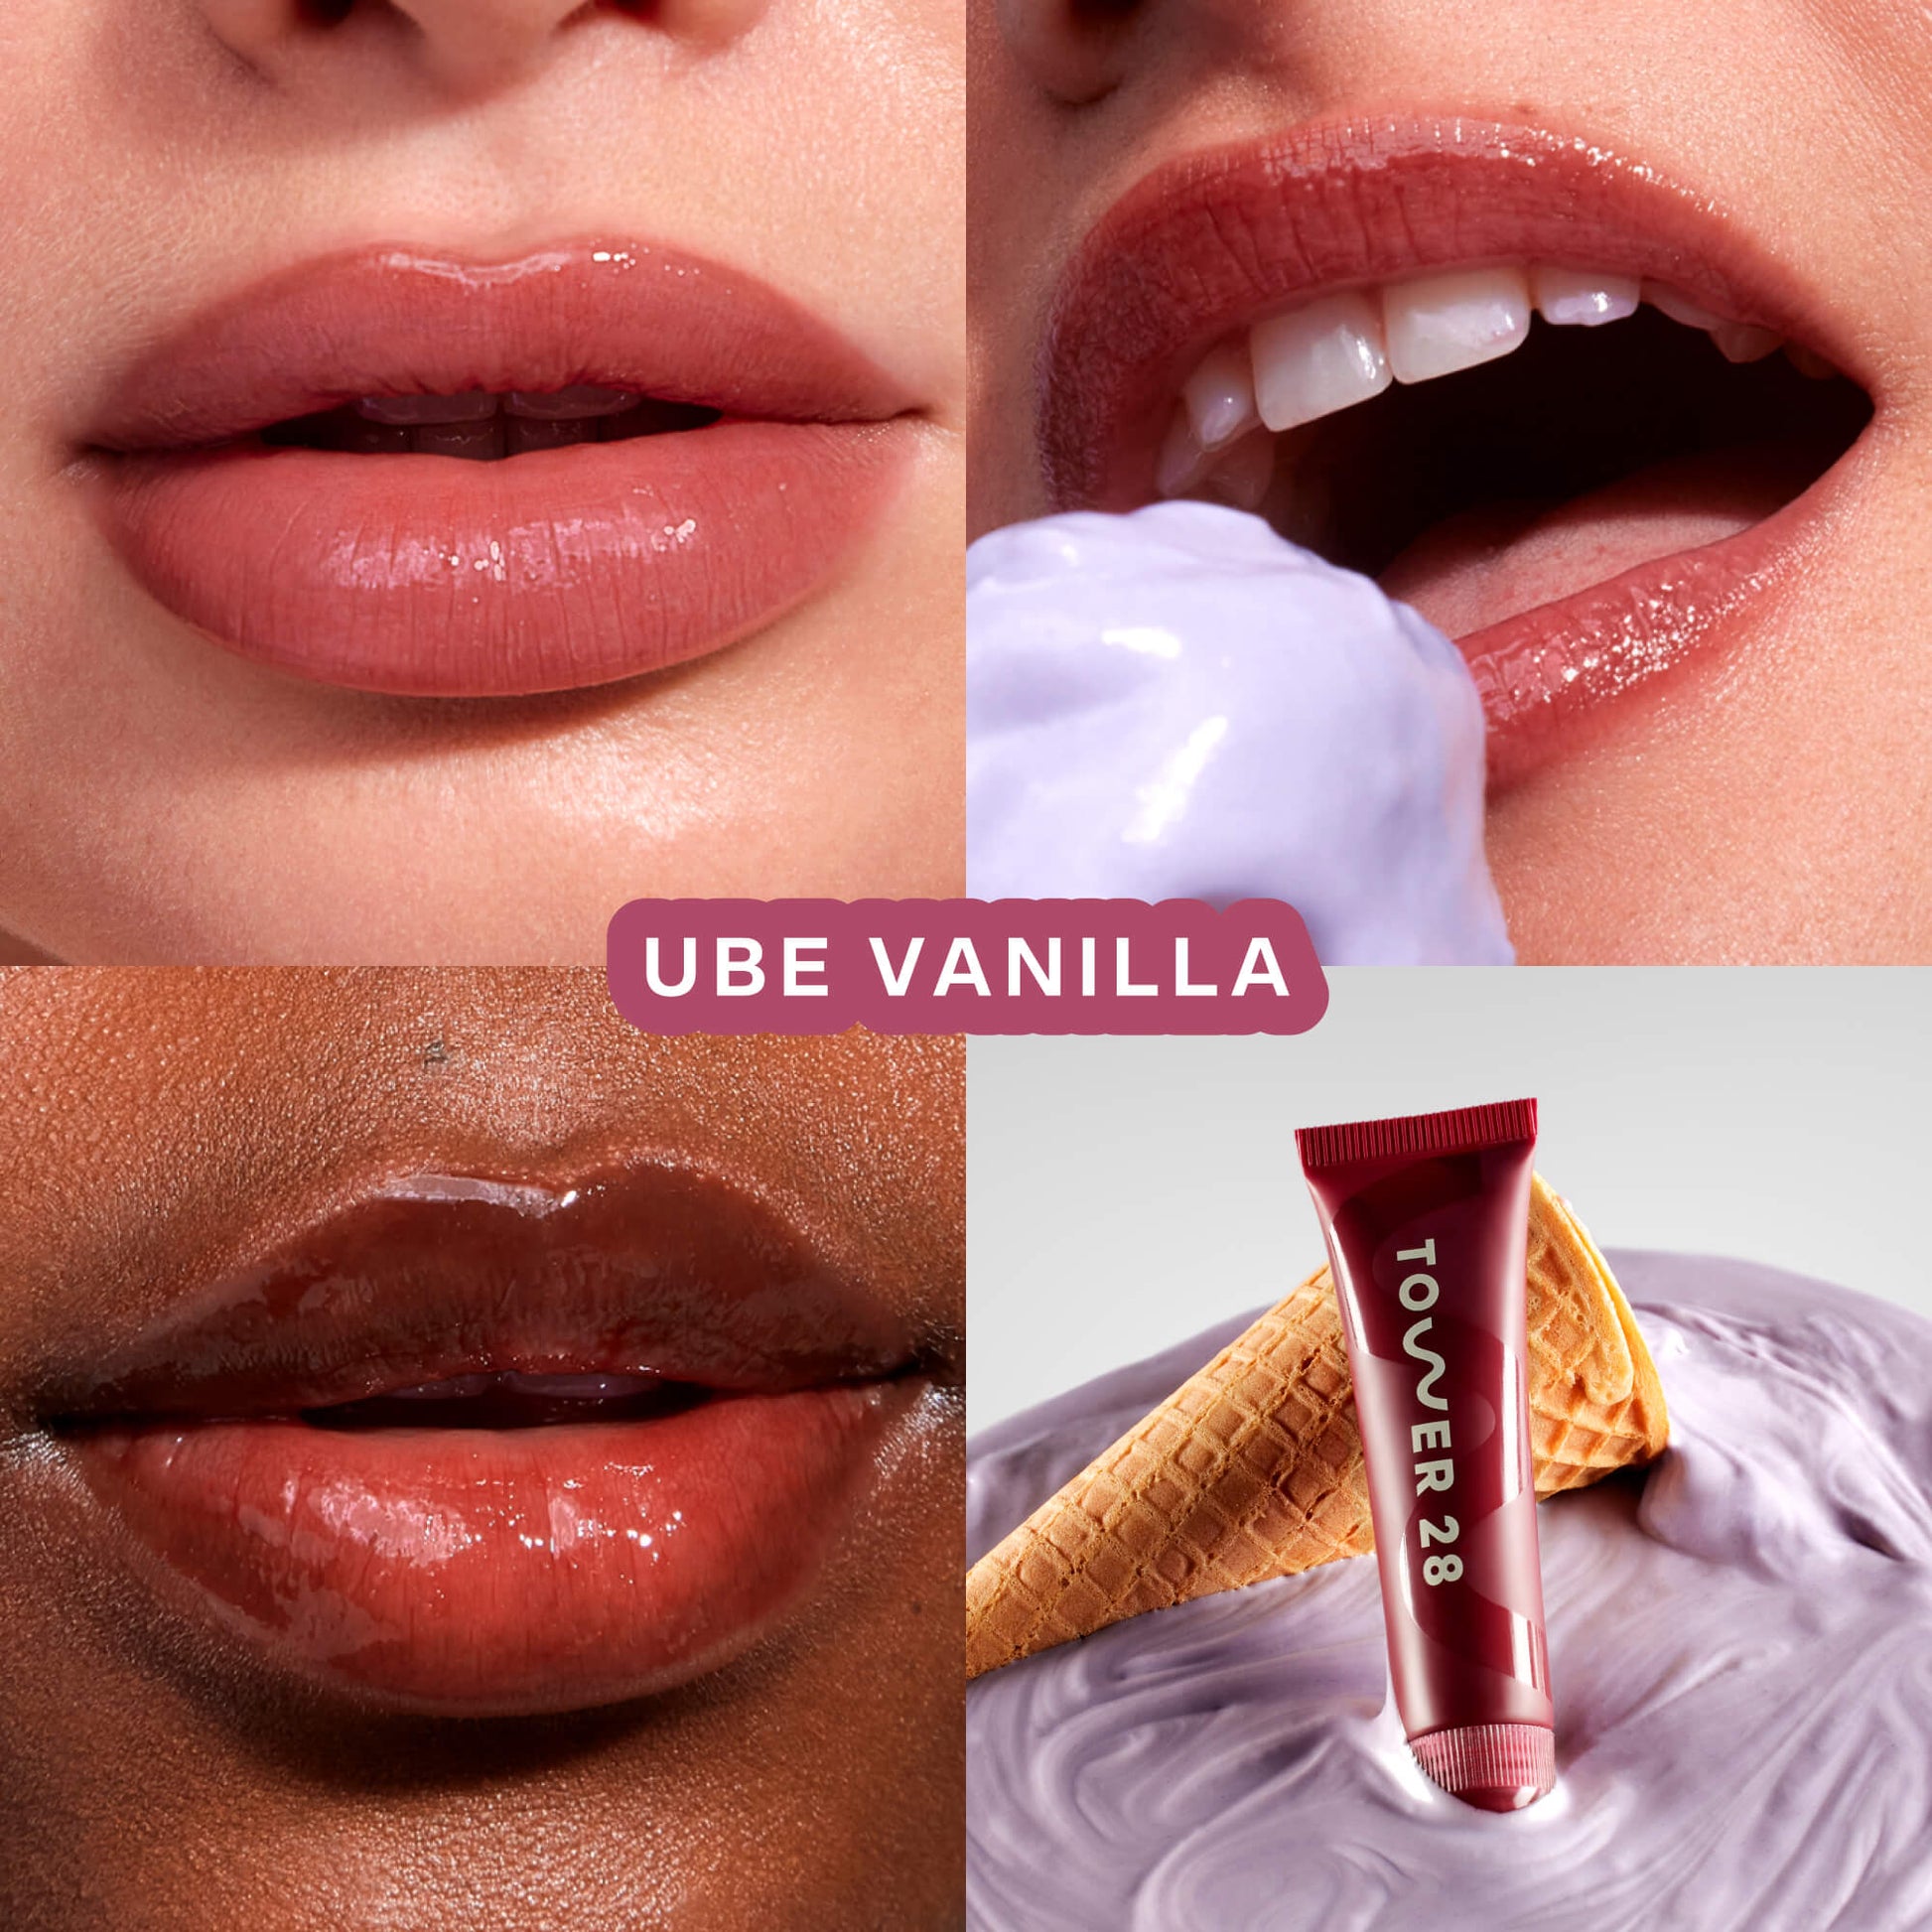 [Tower 28 Beauty's LipSoftie™ Lip Treatment in Ube Vanilla applied on three different skin tones